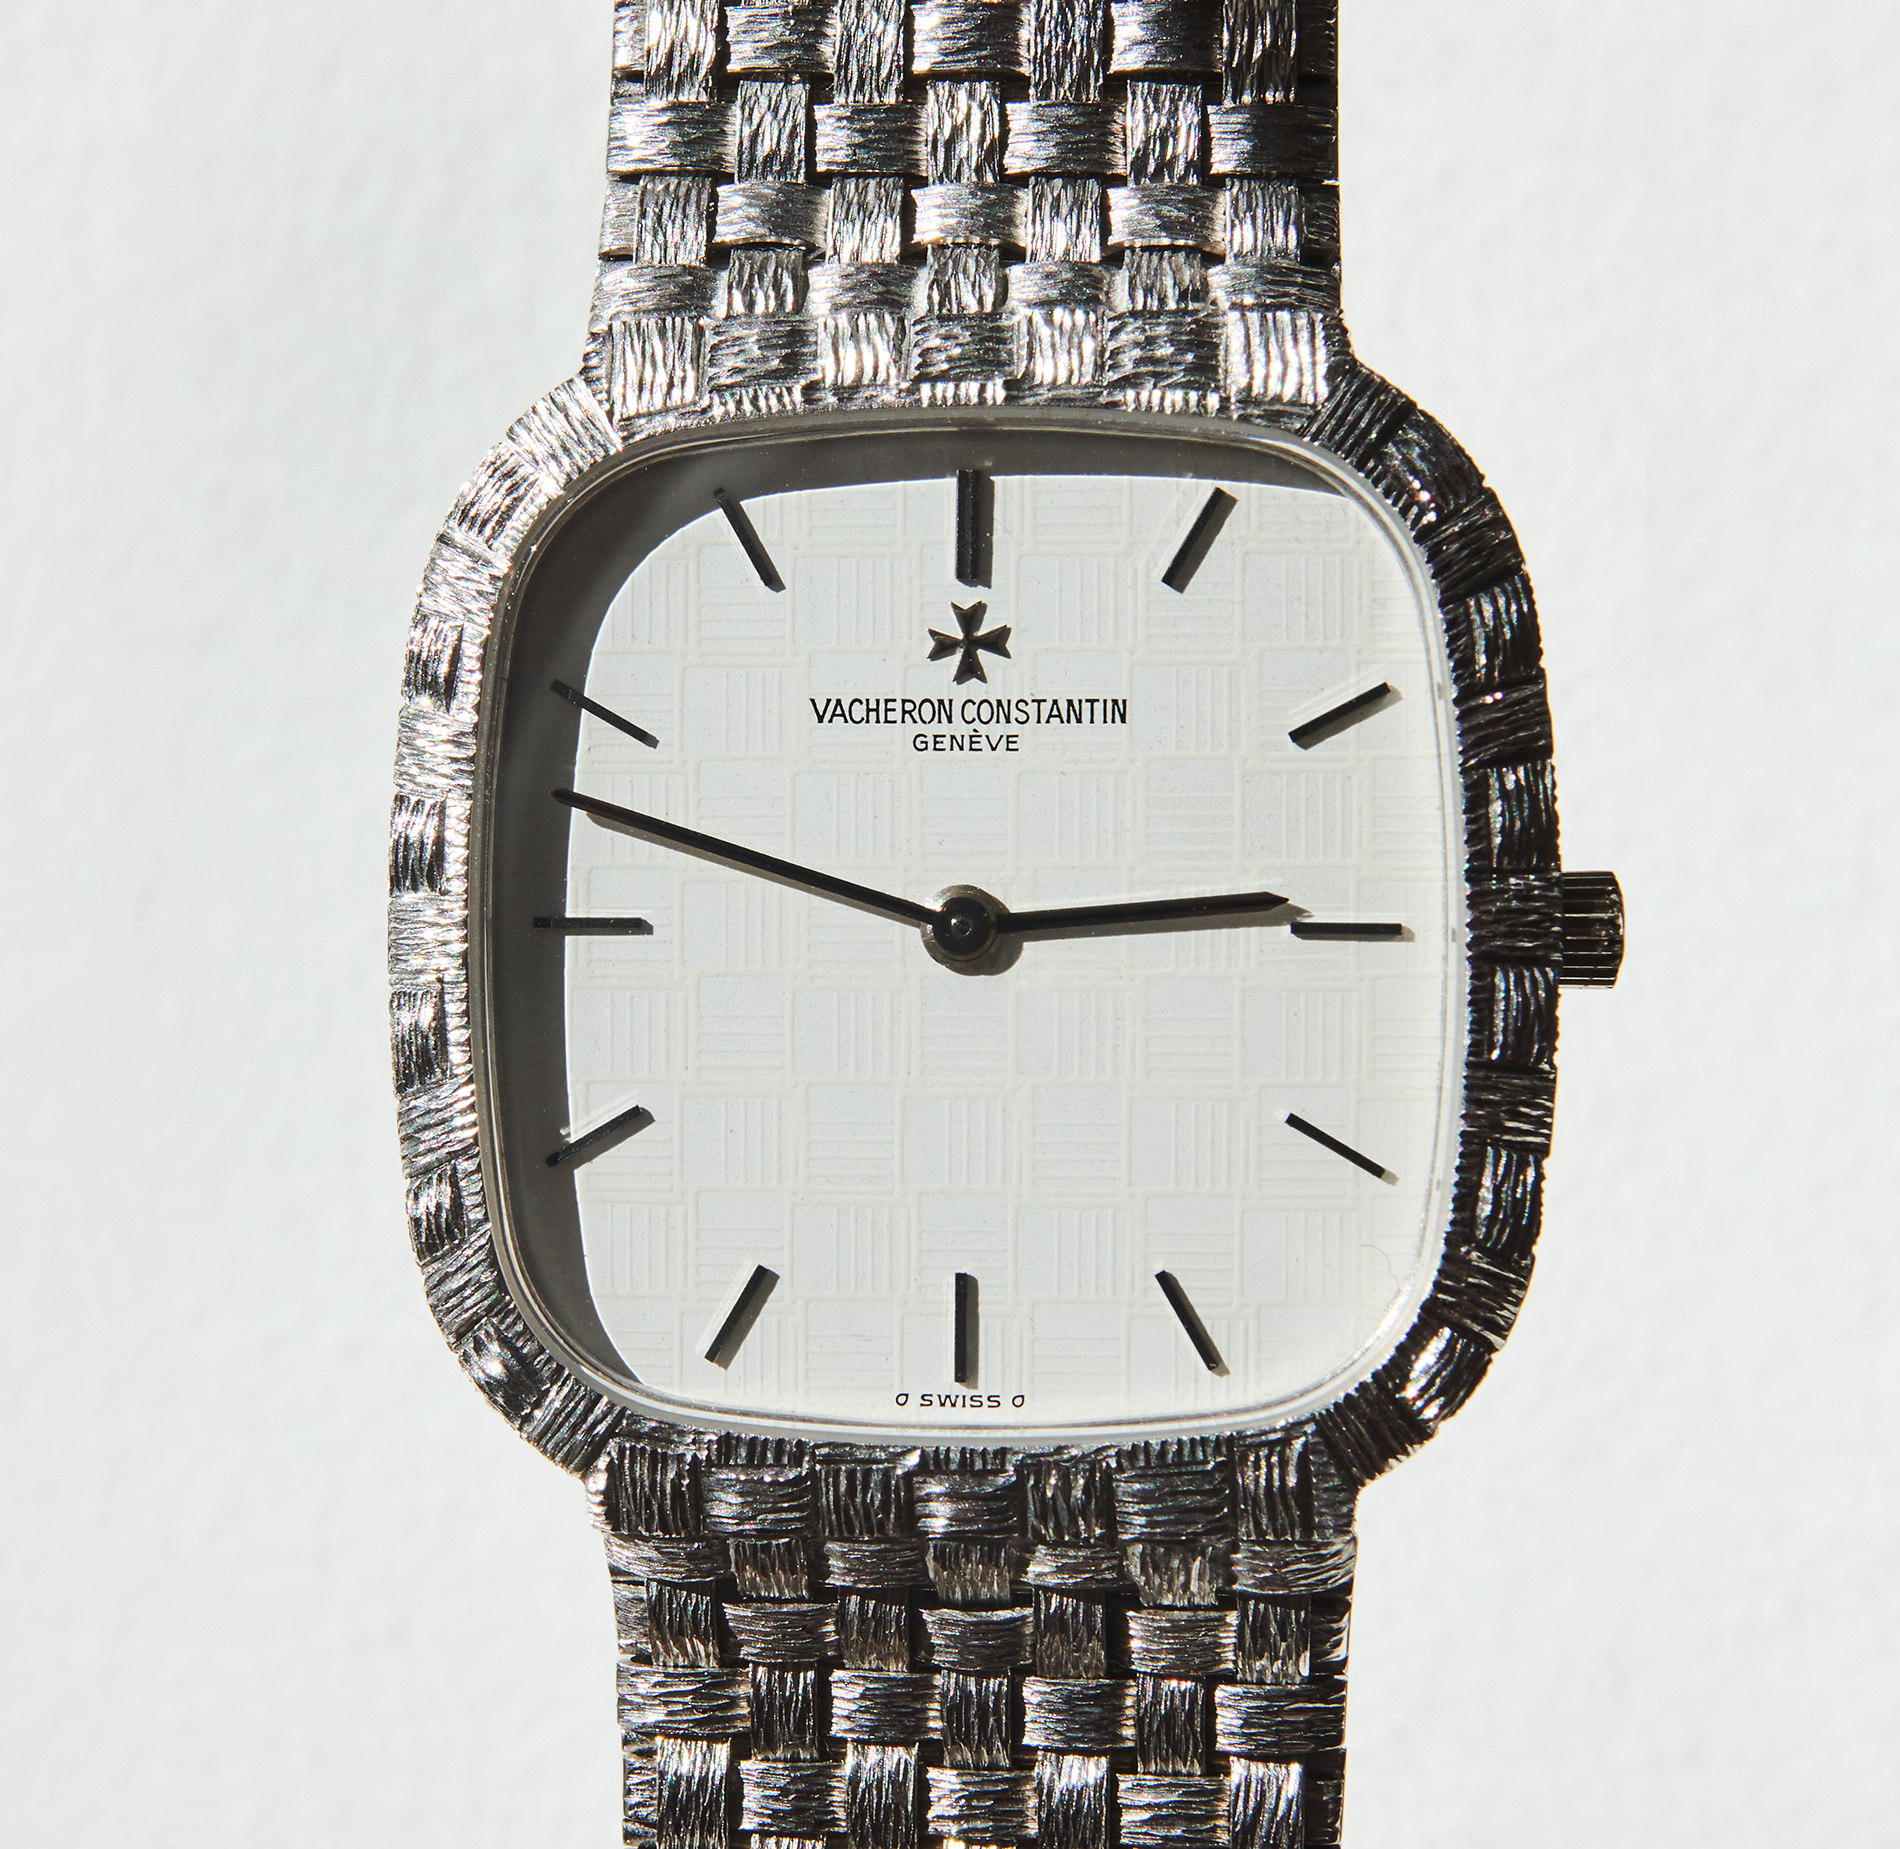 Vacheron Constantin NOS 18k whitegold watch 1970s